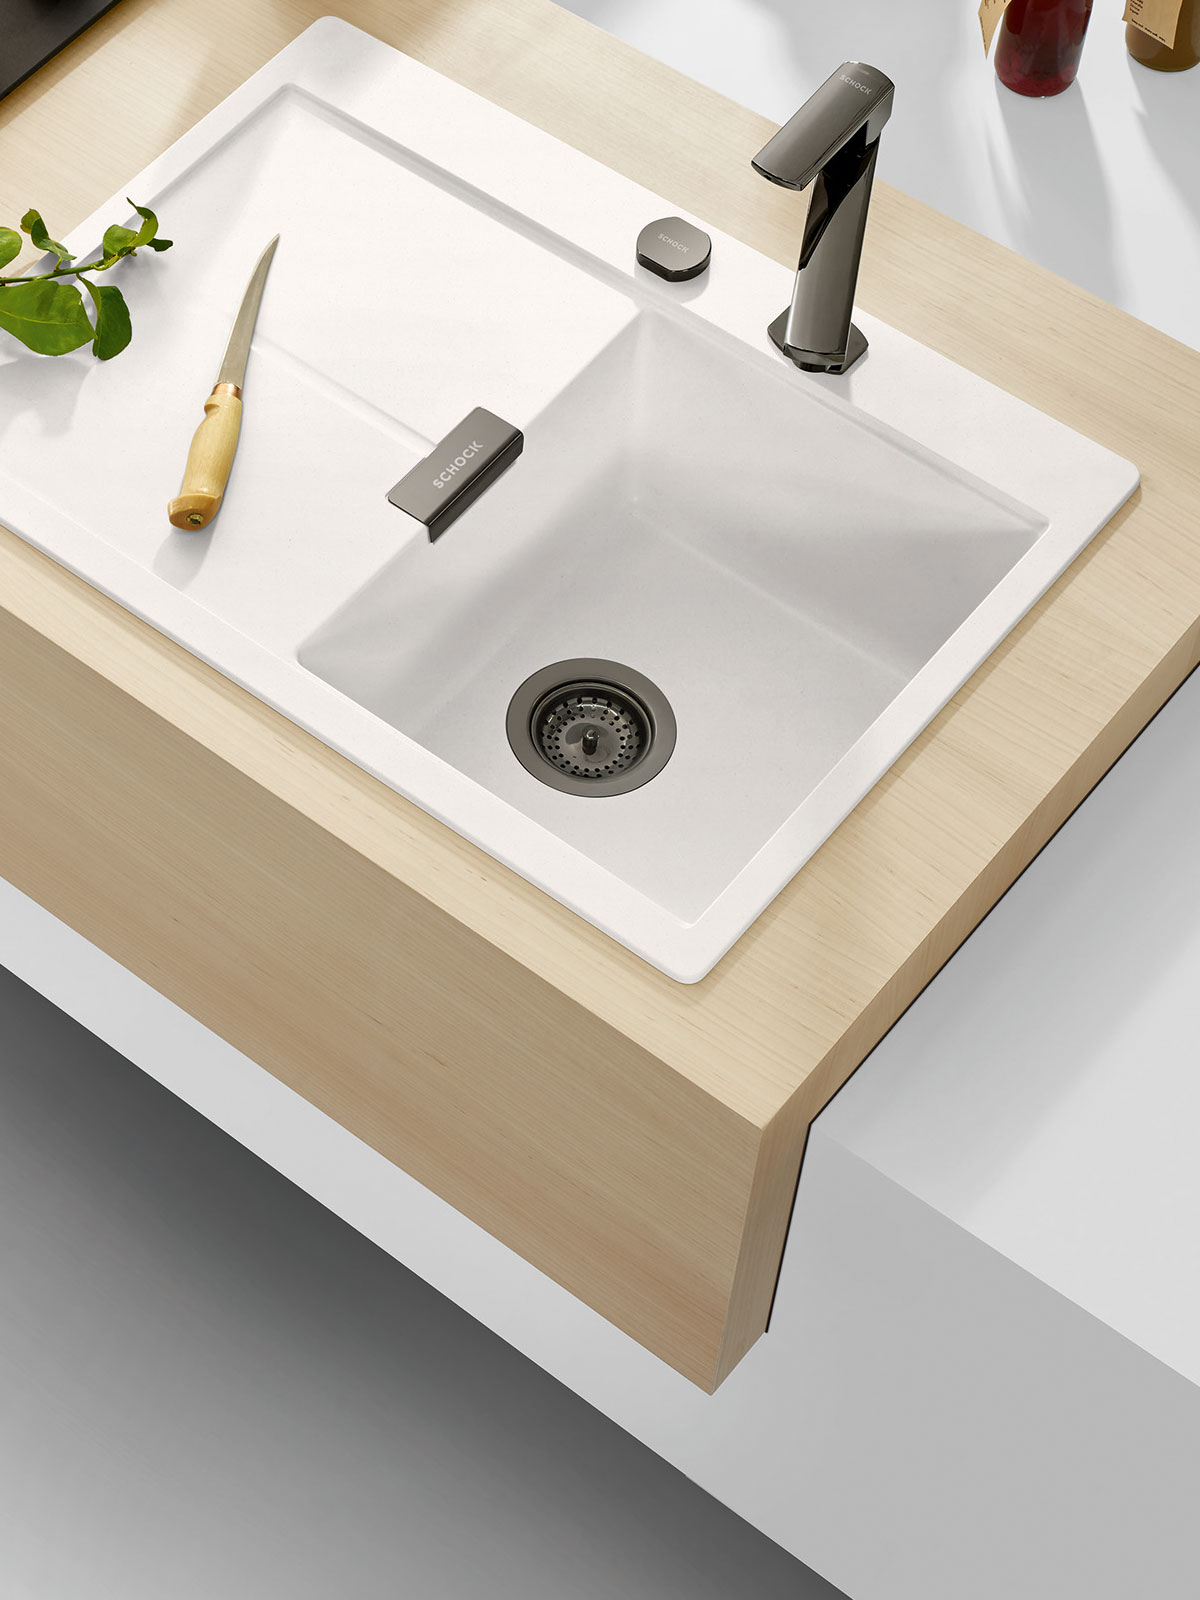 Decorative sink trim